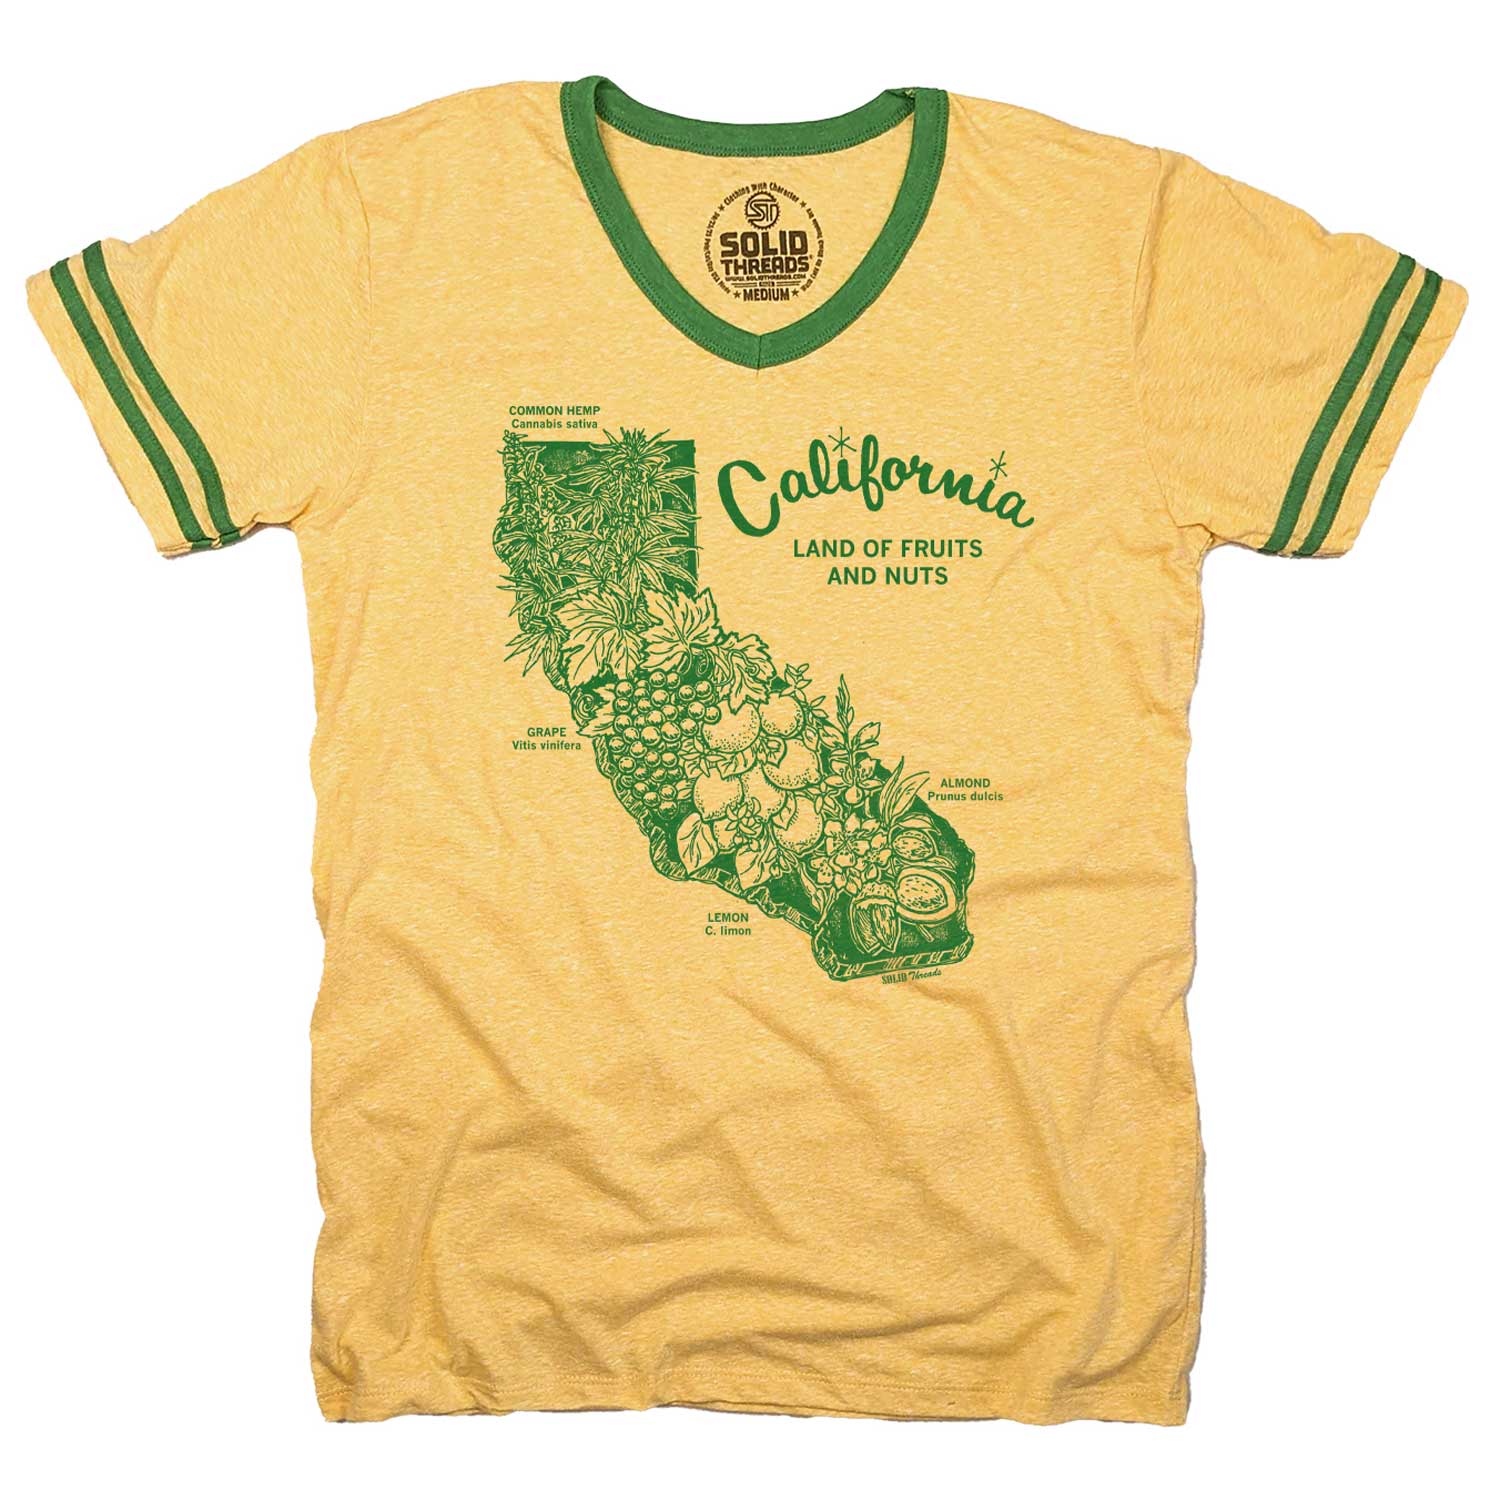 CALIFORNIA-Tee Goodon made in USA